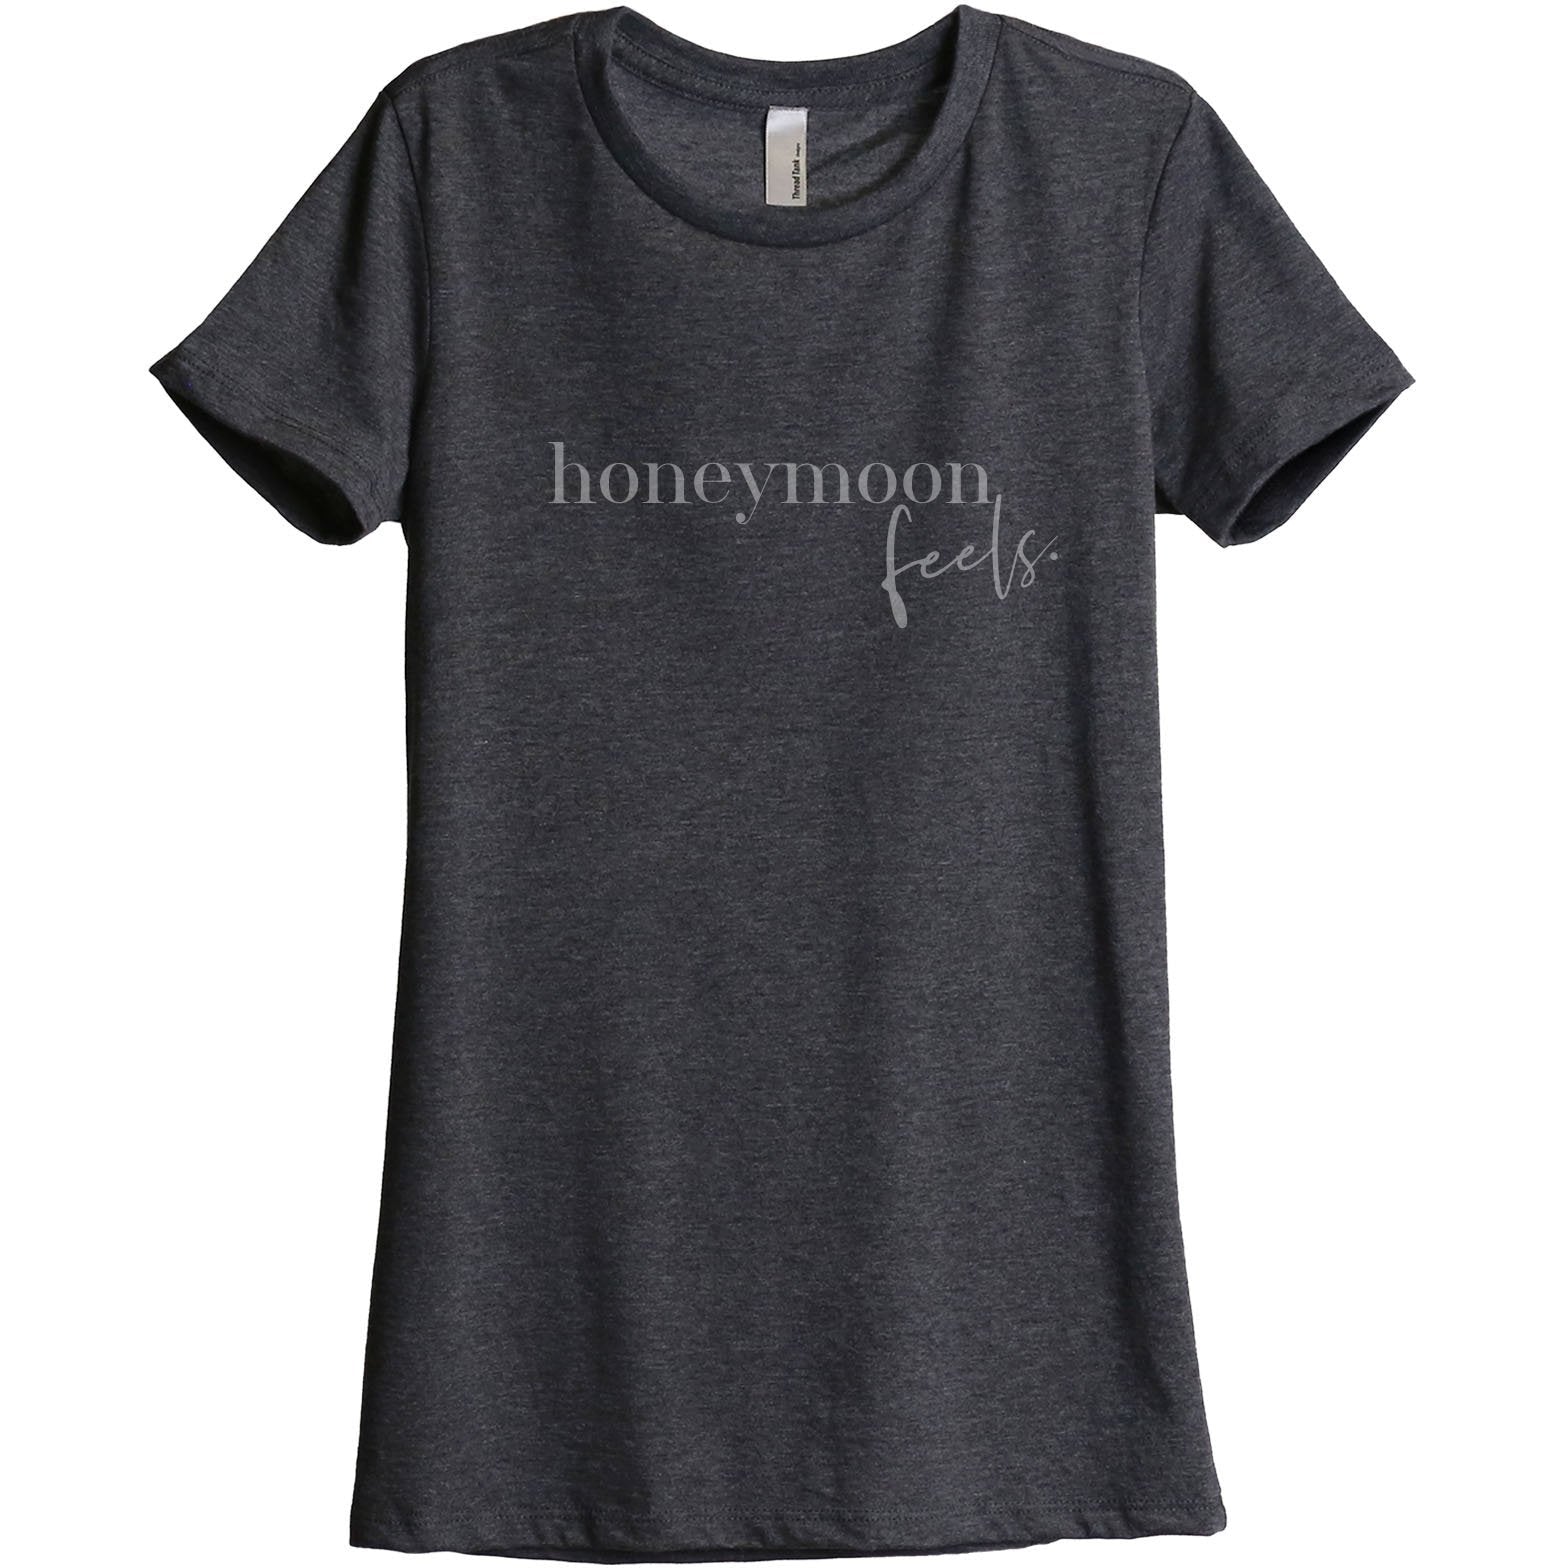 Honeymoon Feels Women's Relaxed Crewneck T-Shirt Top Tee Charcoal Grey
